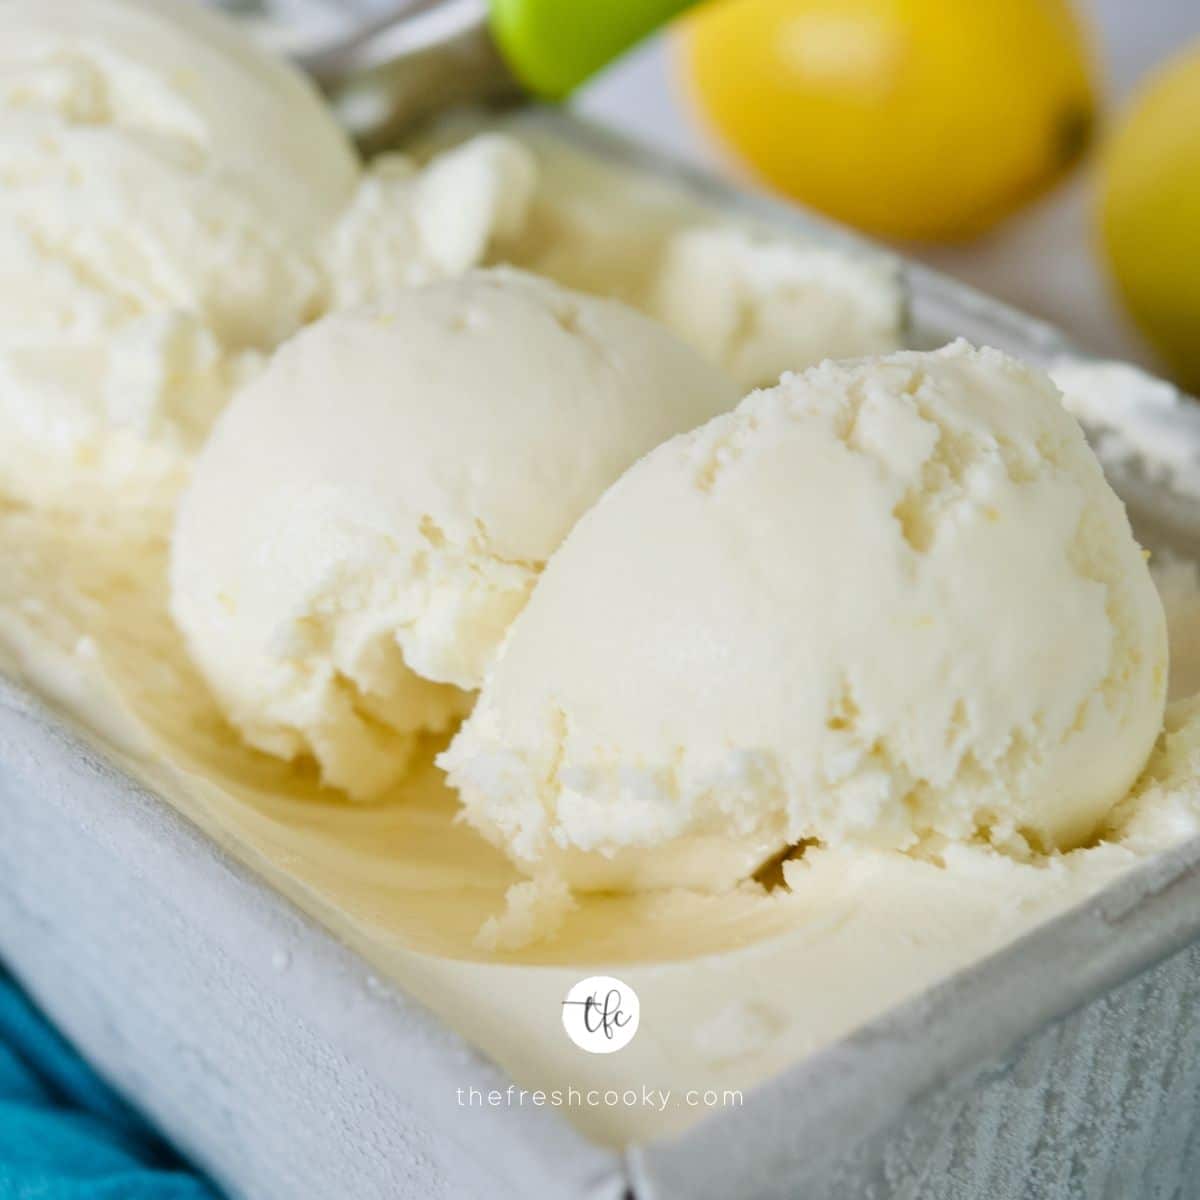 KitchenAid Ice Cream Recipes - SueBee Homemaker